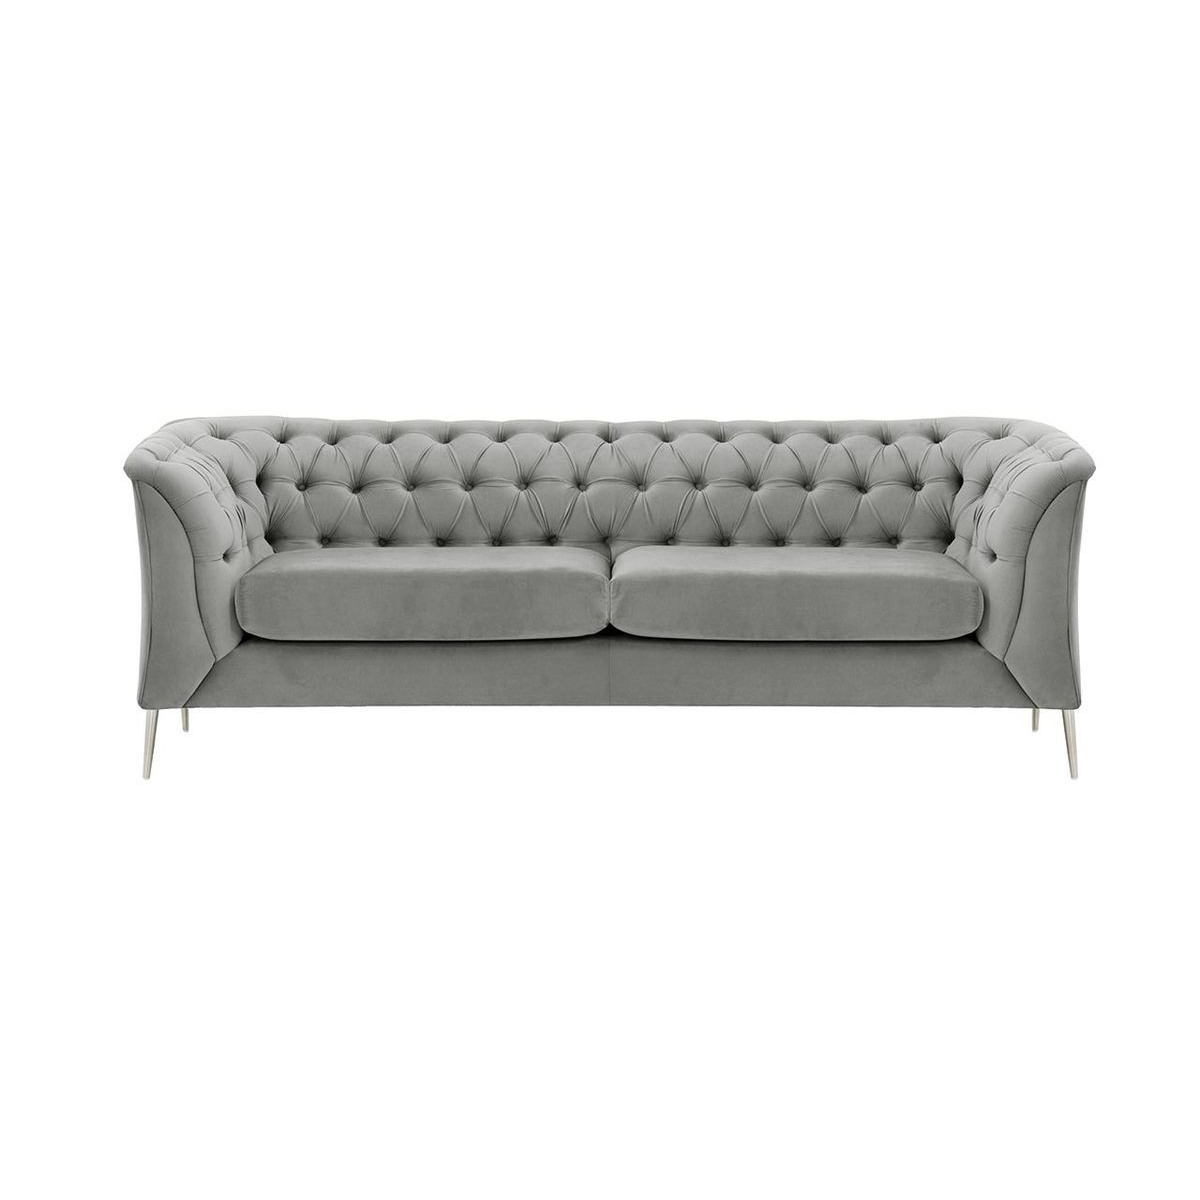 Chesterfield Modern 2,5 Seater Sofa, silver, Leg colour: chrome metal - image 1